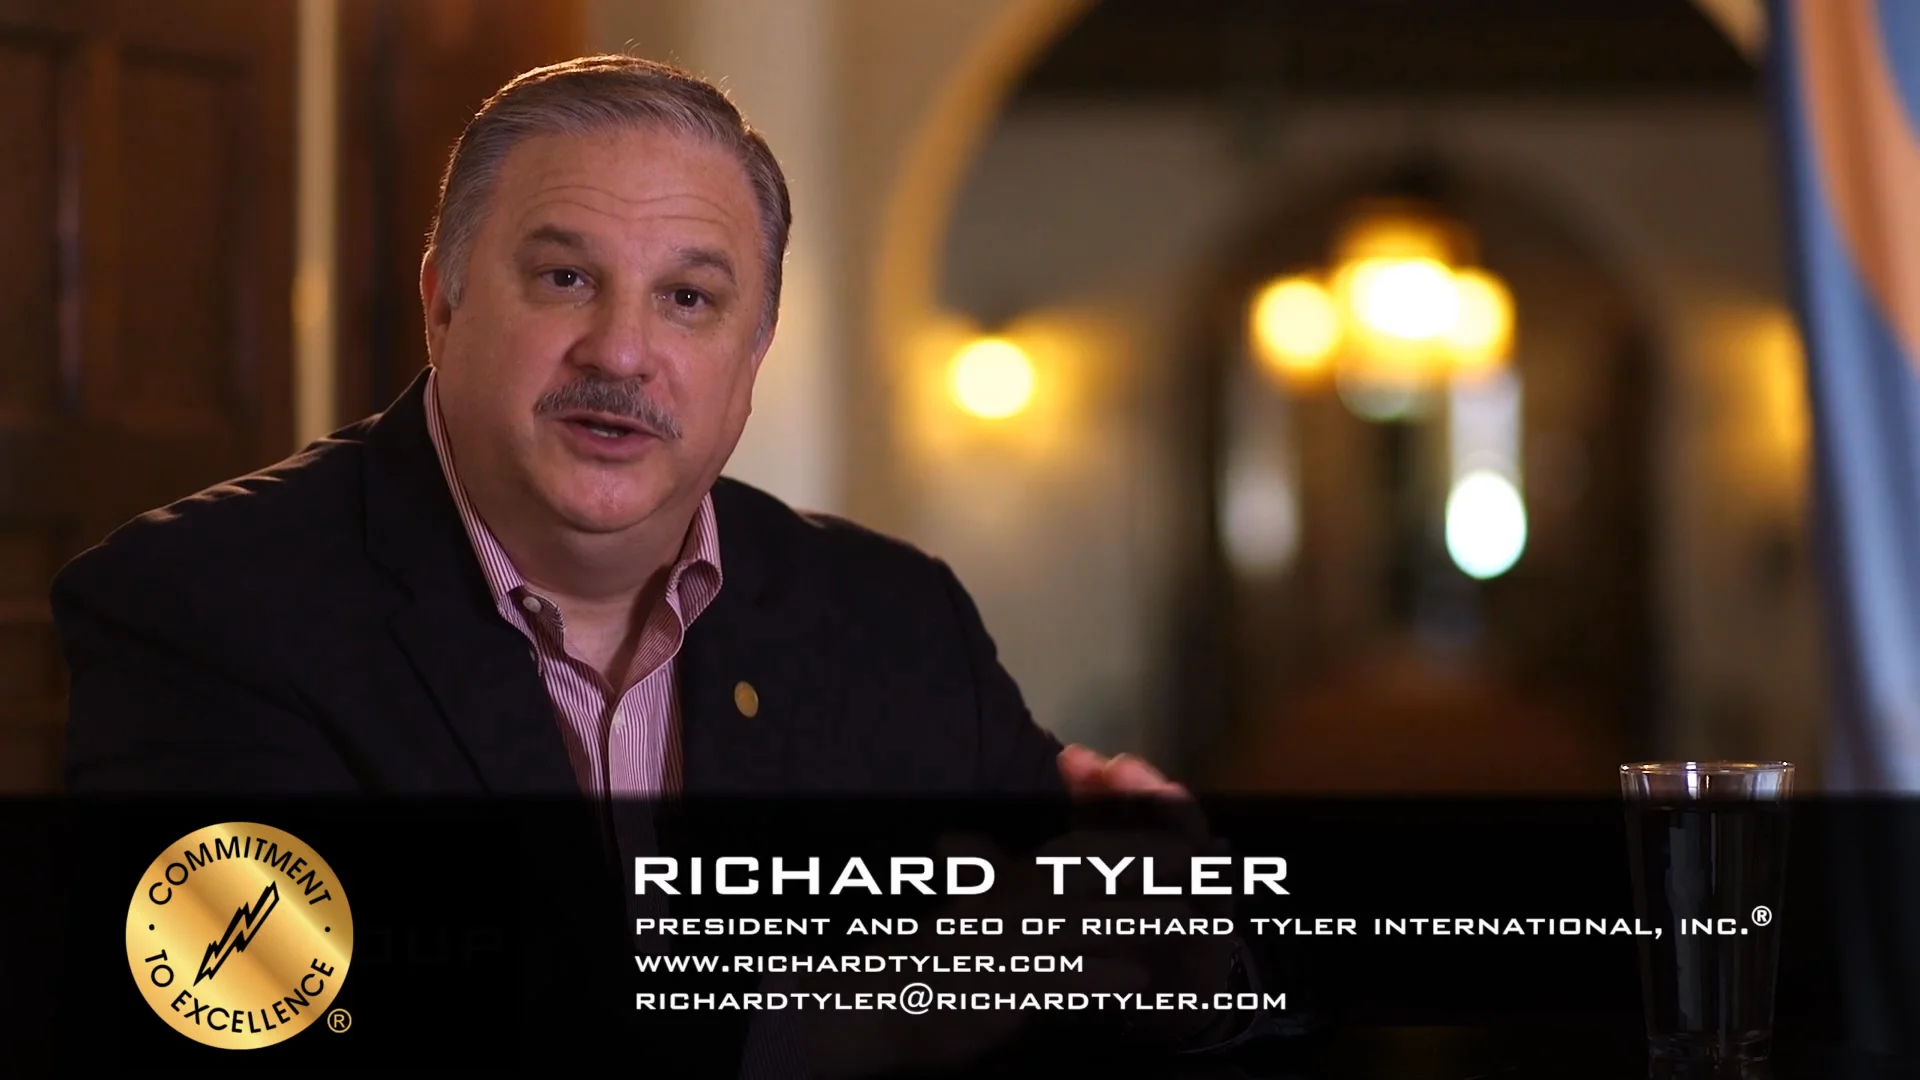 Richard Tyler